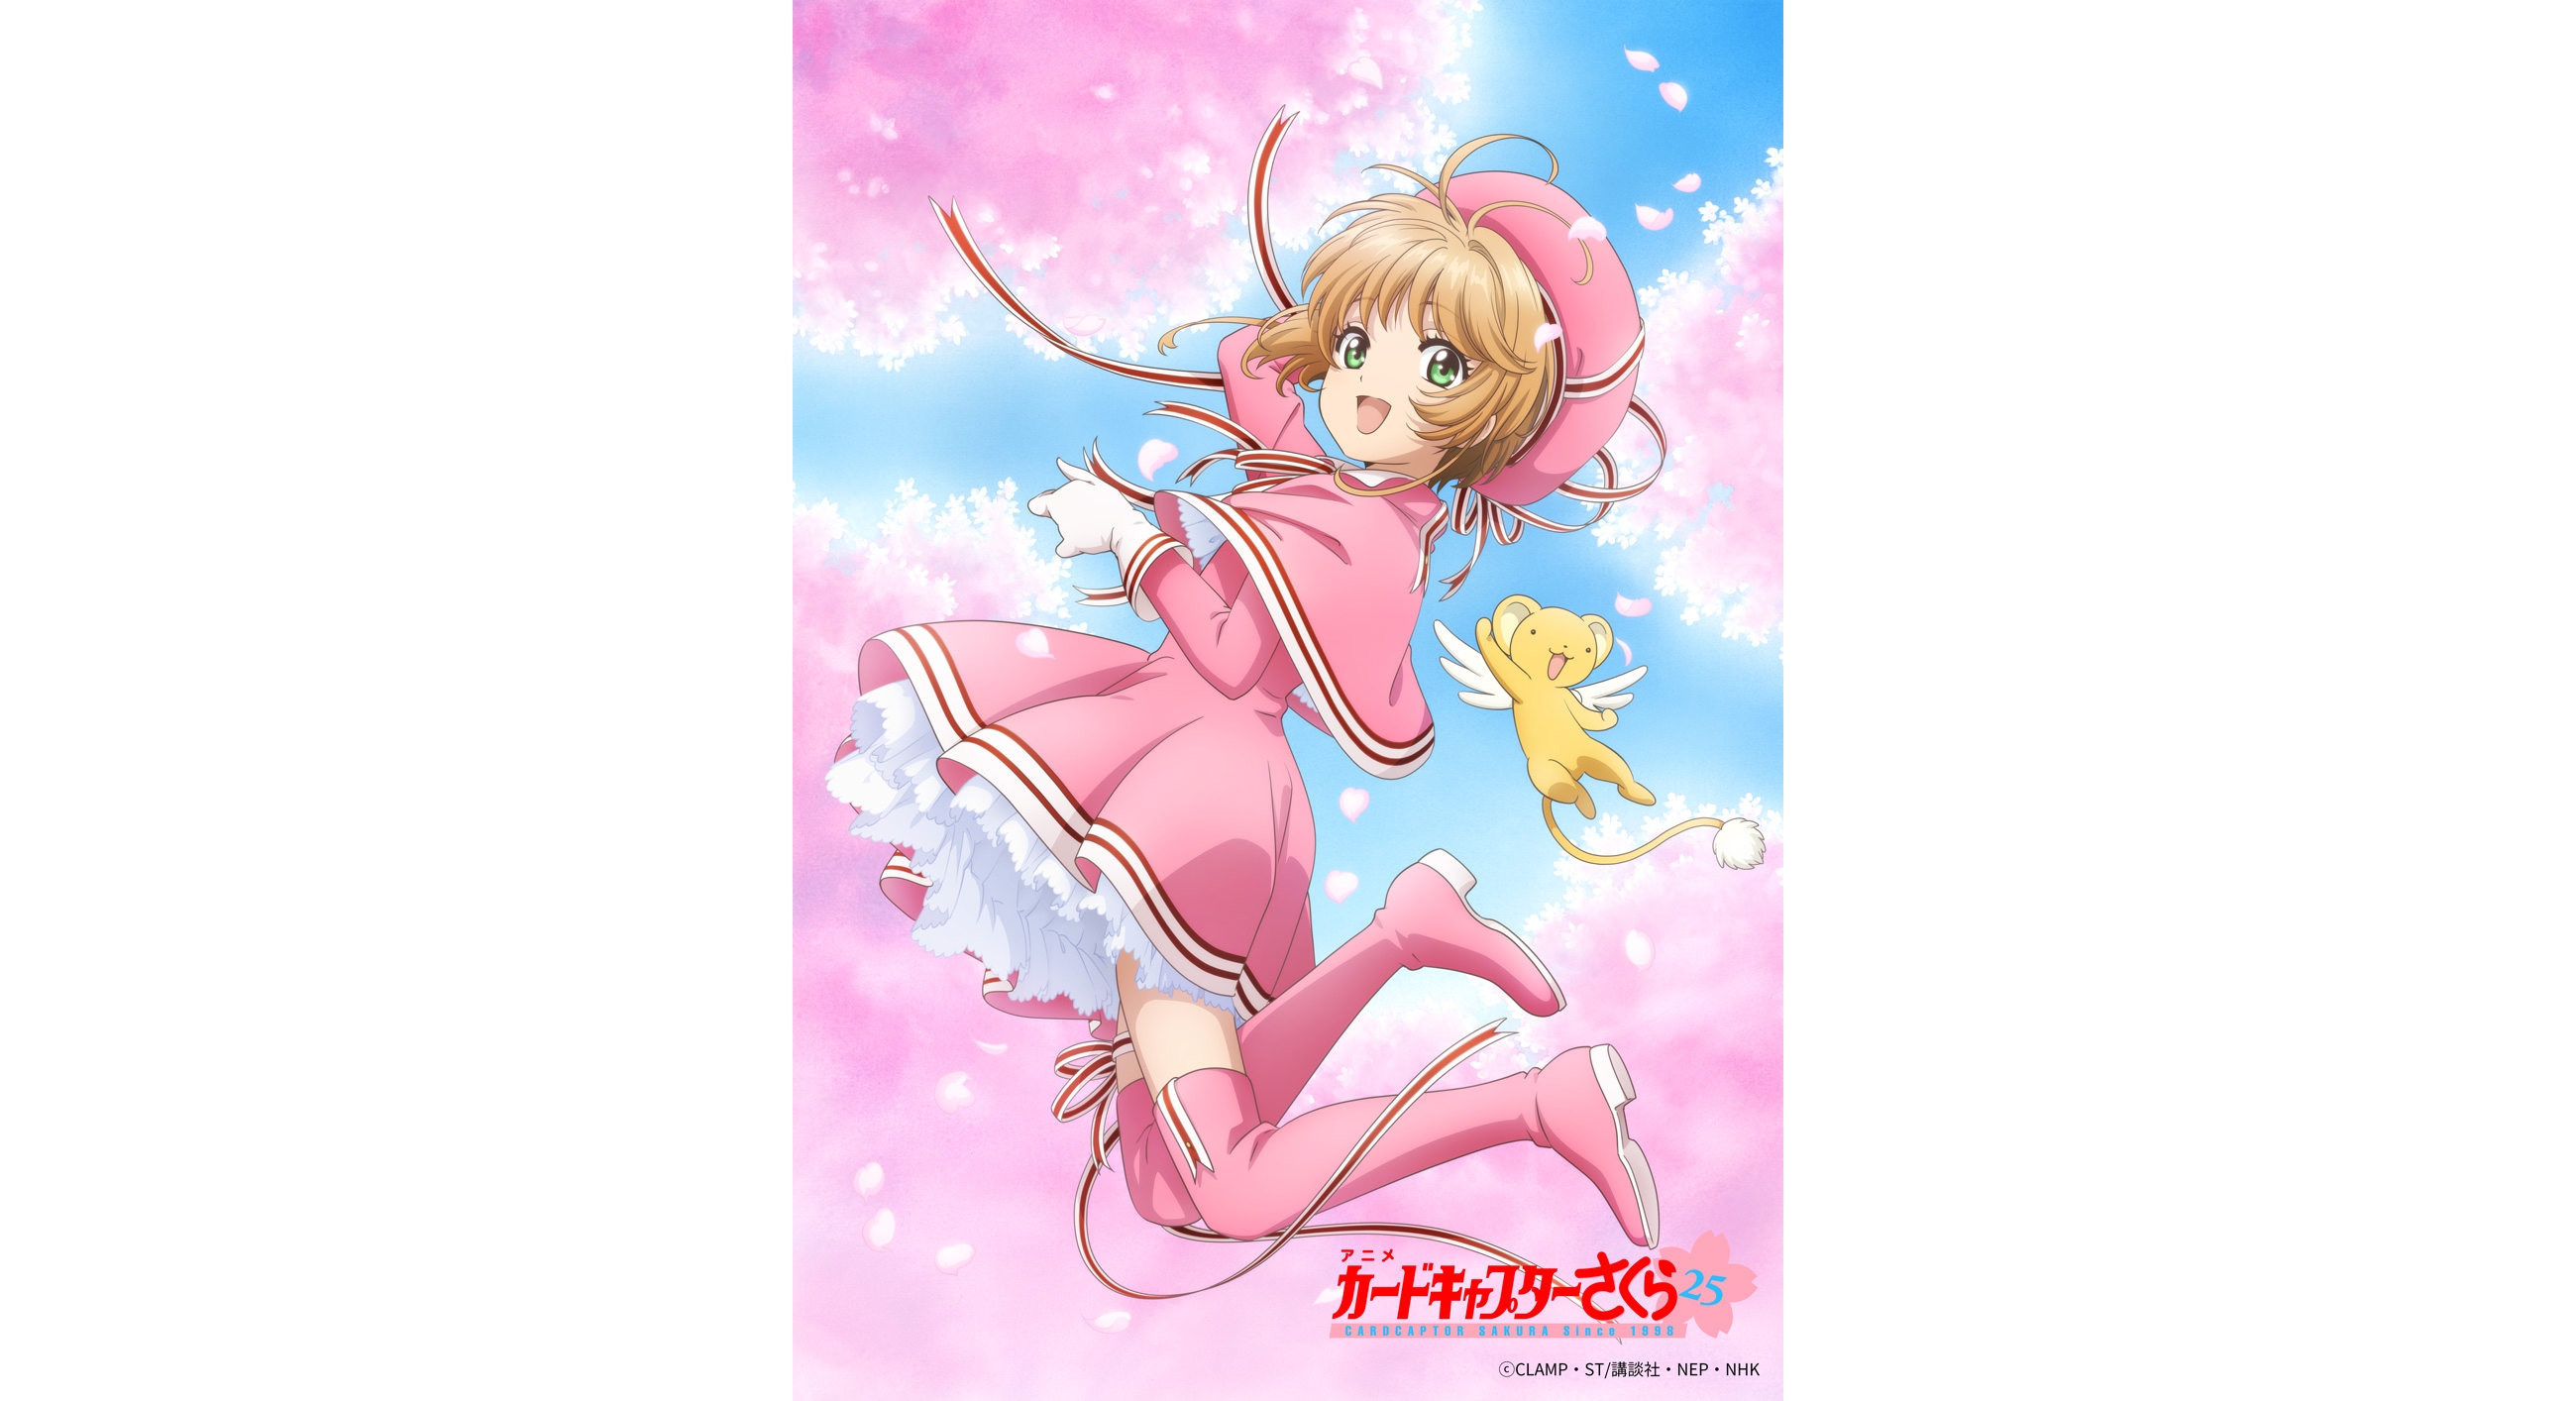 Cardcaptor Sakura Anime Series 25th Anniversary Project Unveiled